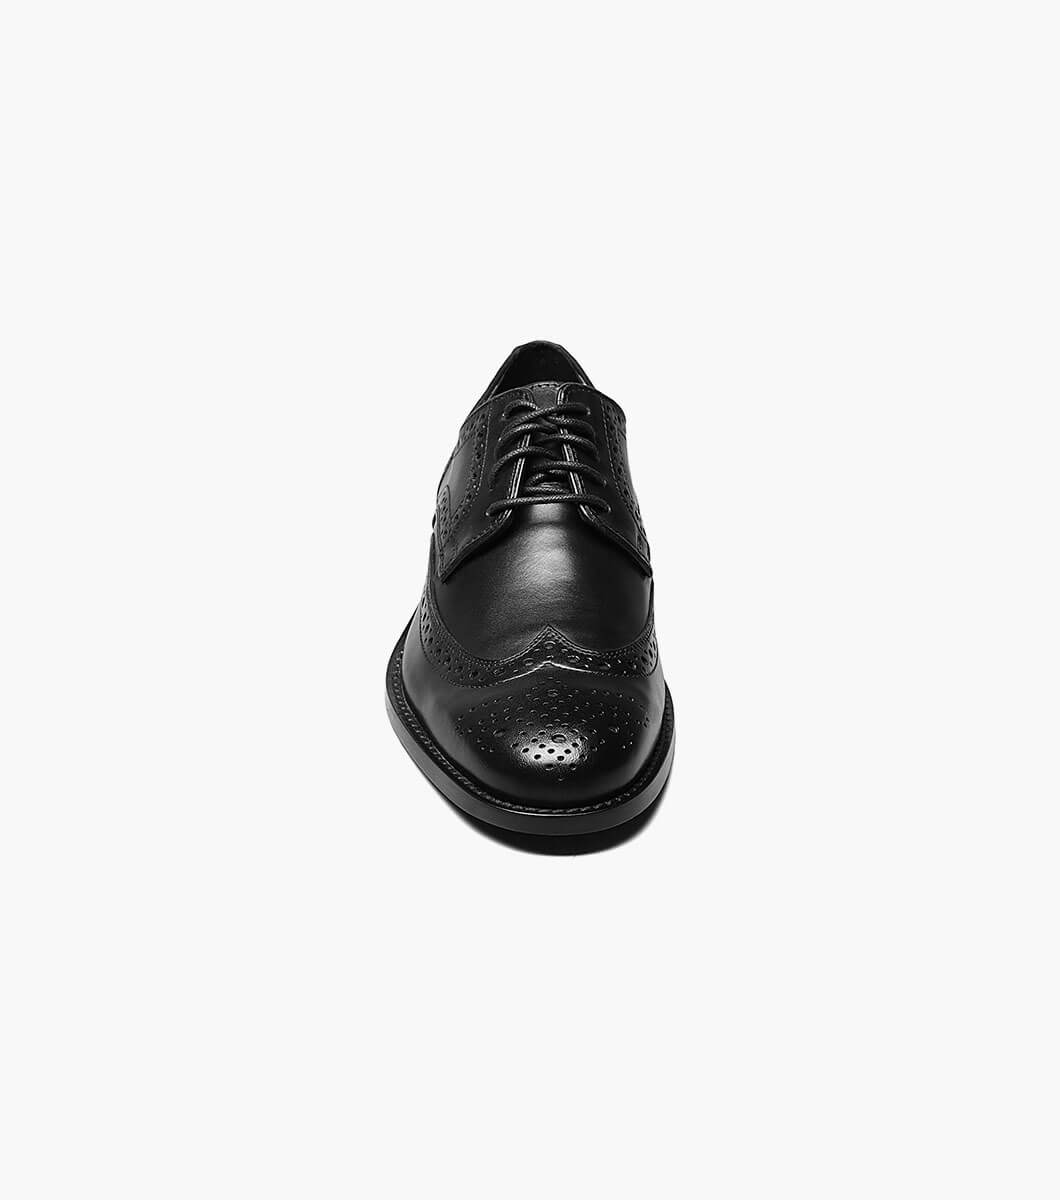 Nunn Bush Men's Wing tip oxford Black leather Shoes 84525-001 